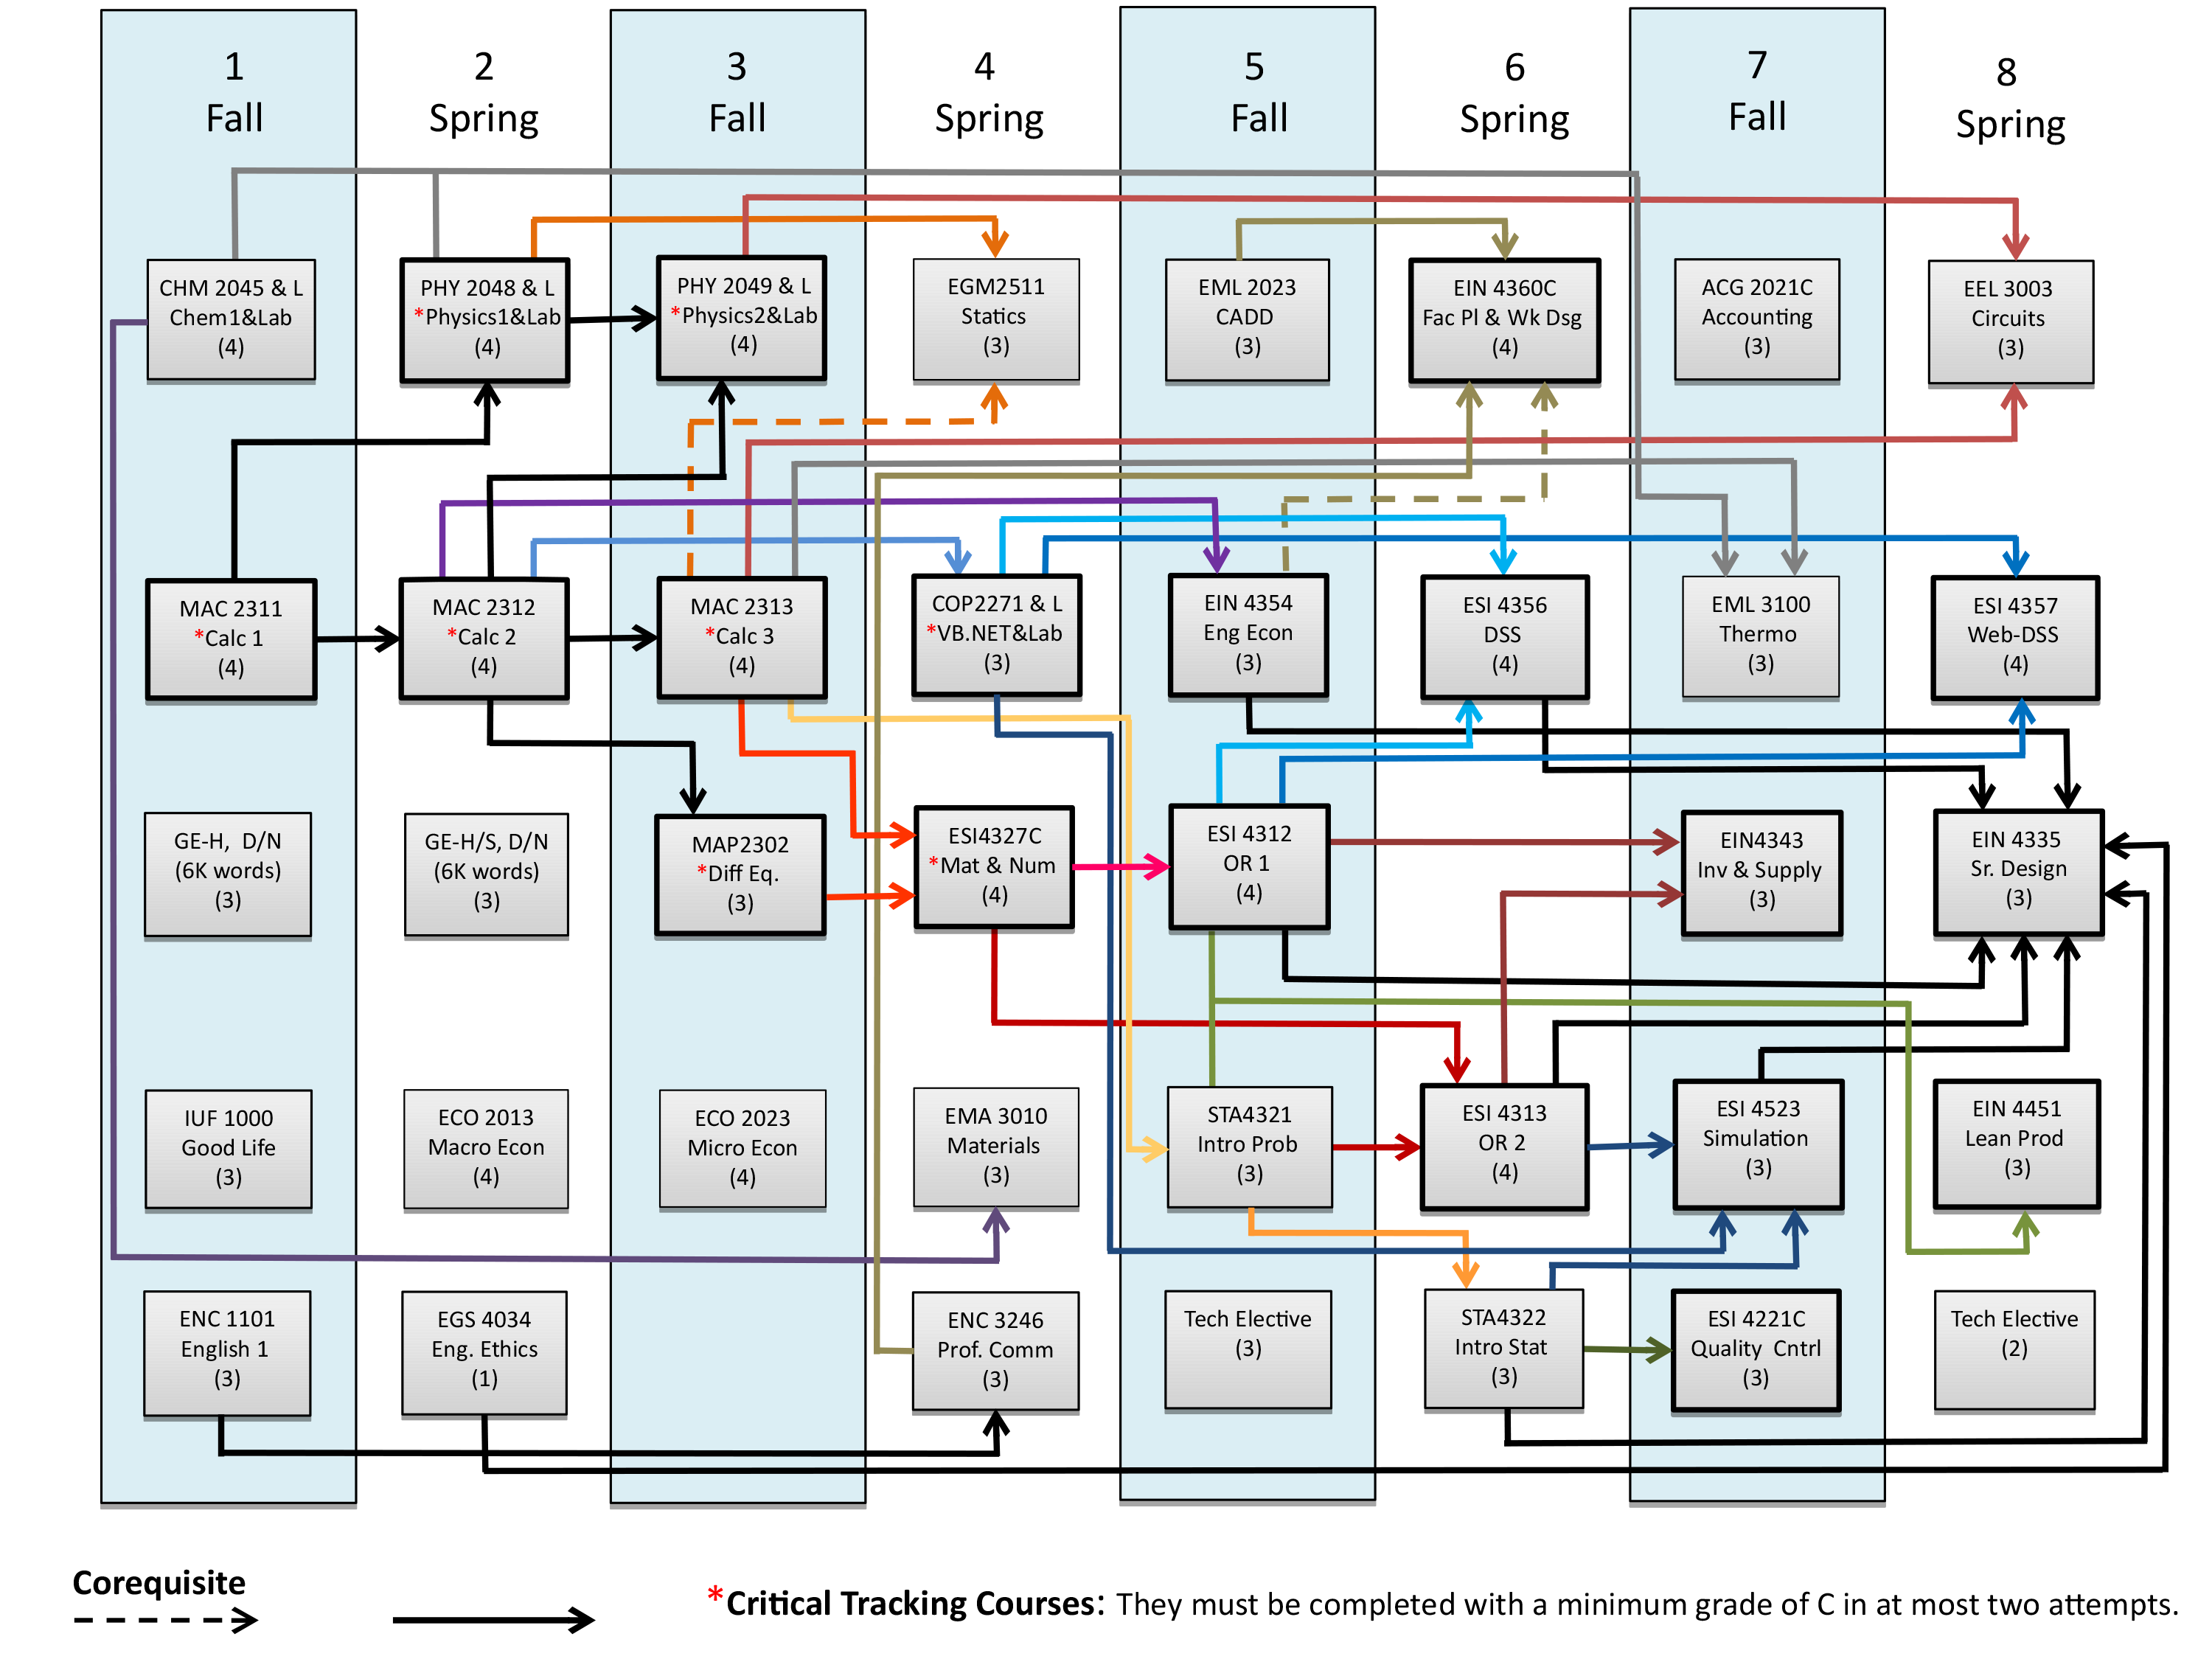 Engineering Chart 2